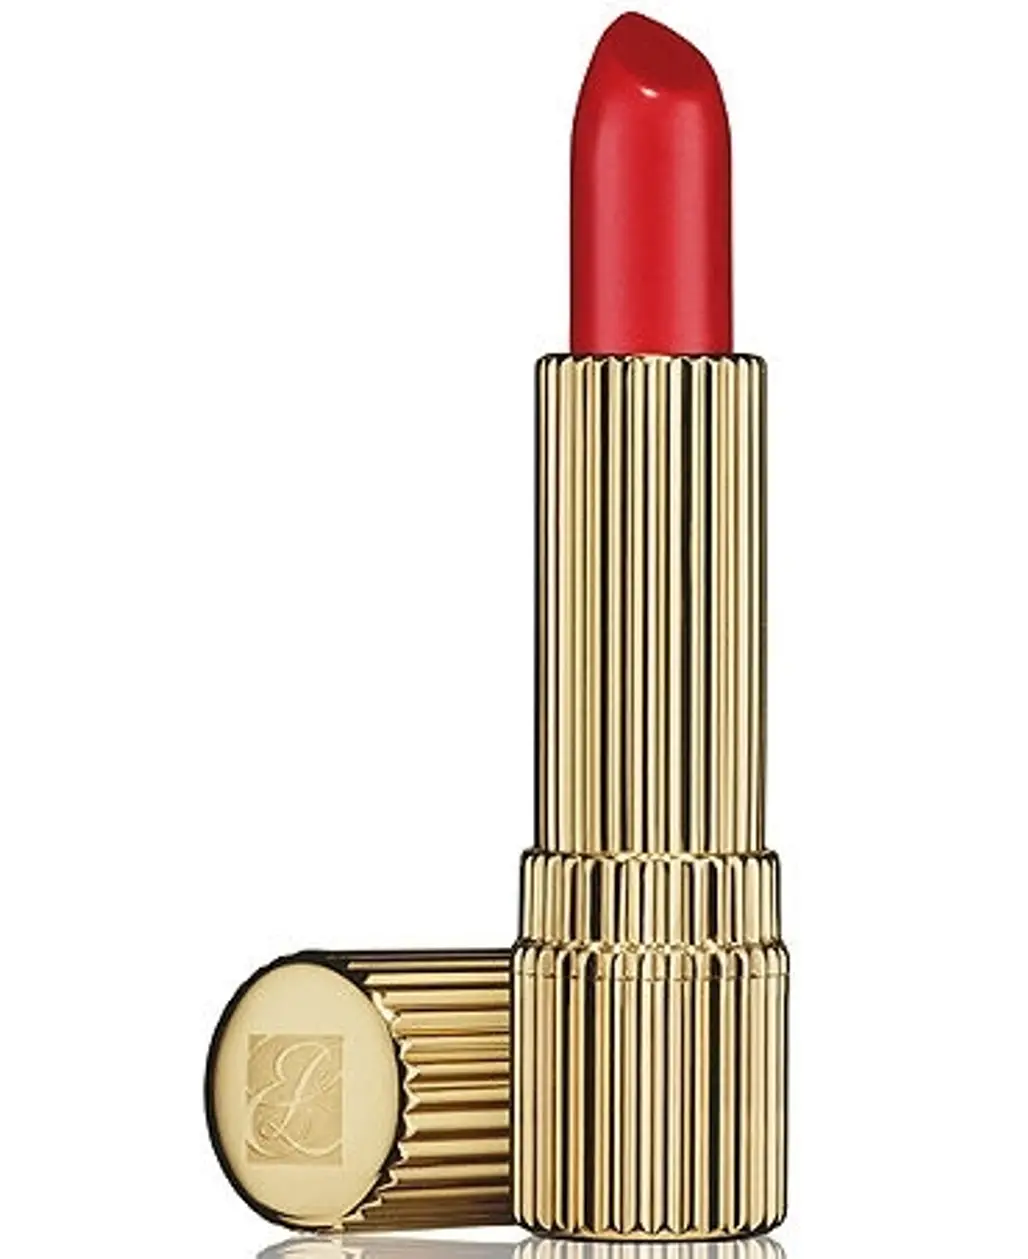 Estée Lauder Signature Hydra Lustre Lipstick in Rich Red